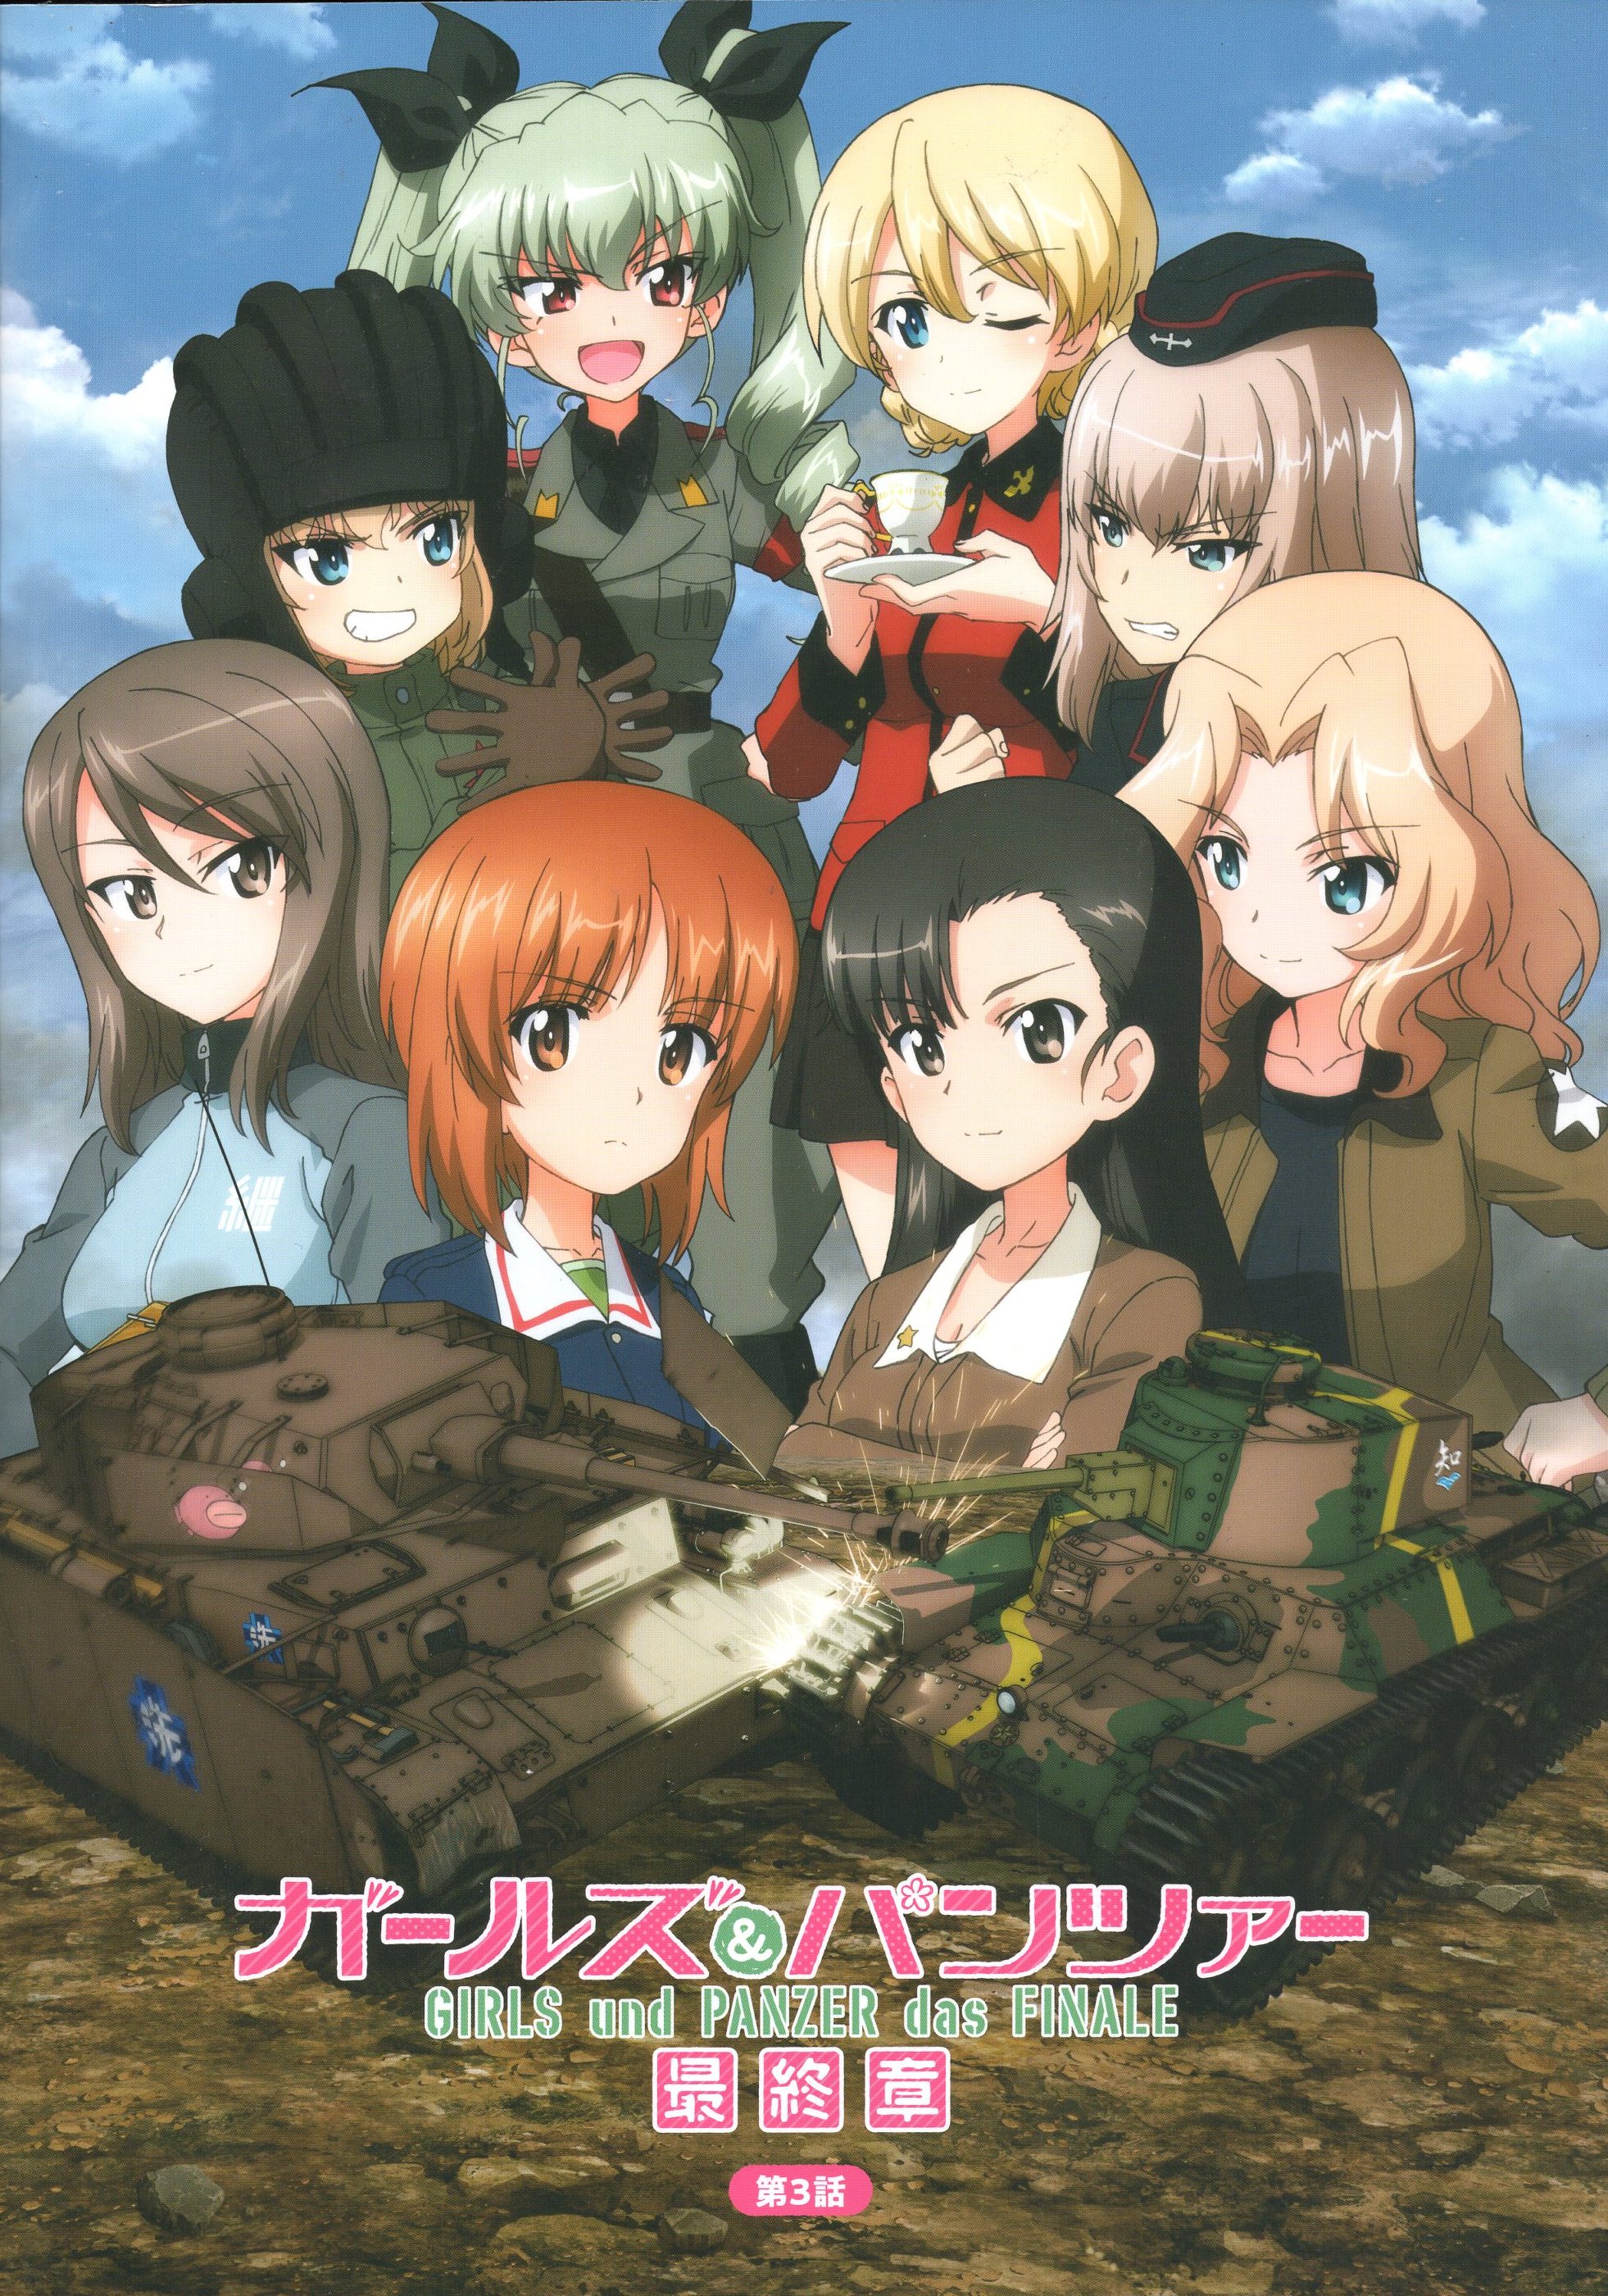 Shaw gate anime pamphlet Girls Und Panzer final Chapter 3 Episode 2021 |  Mandarake Online Shop